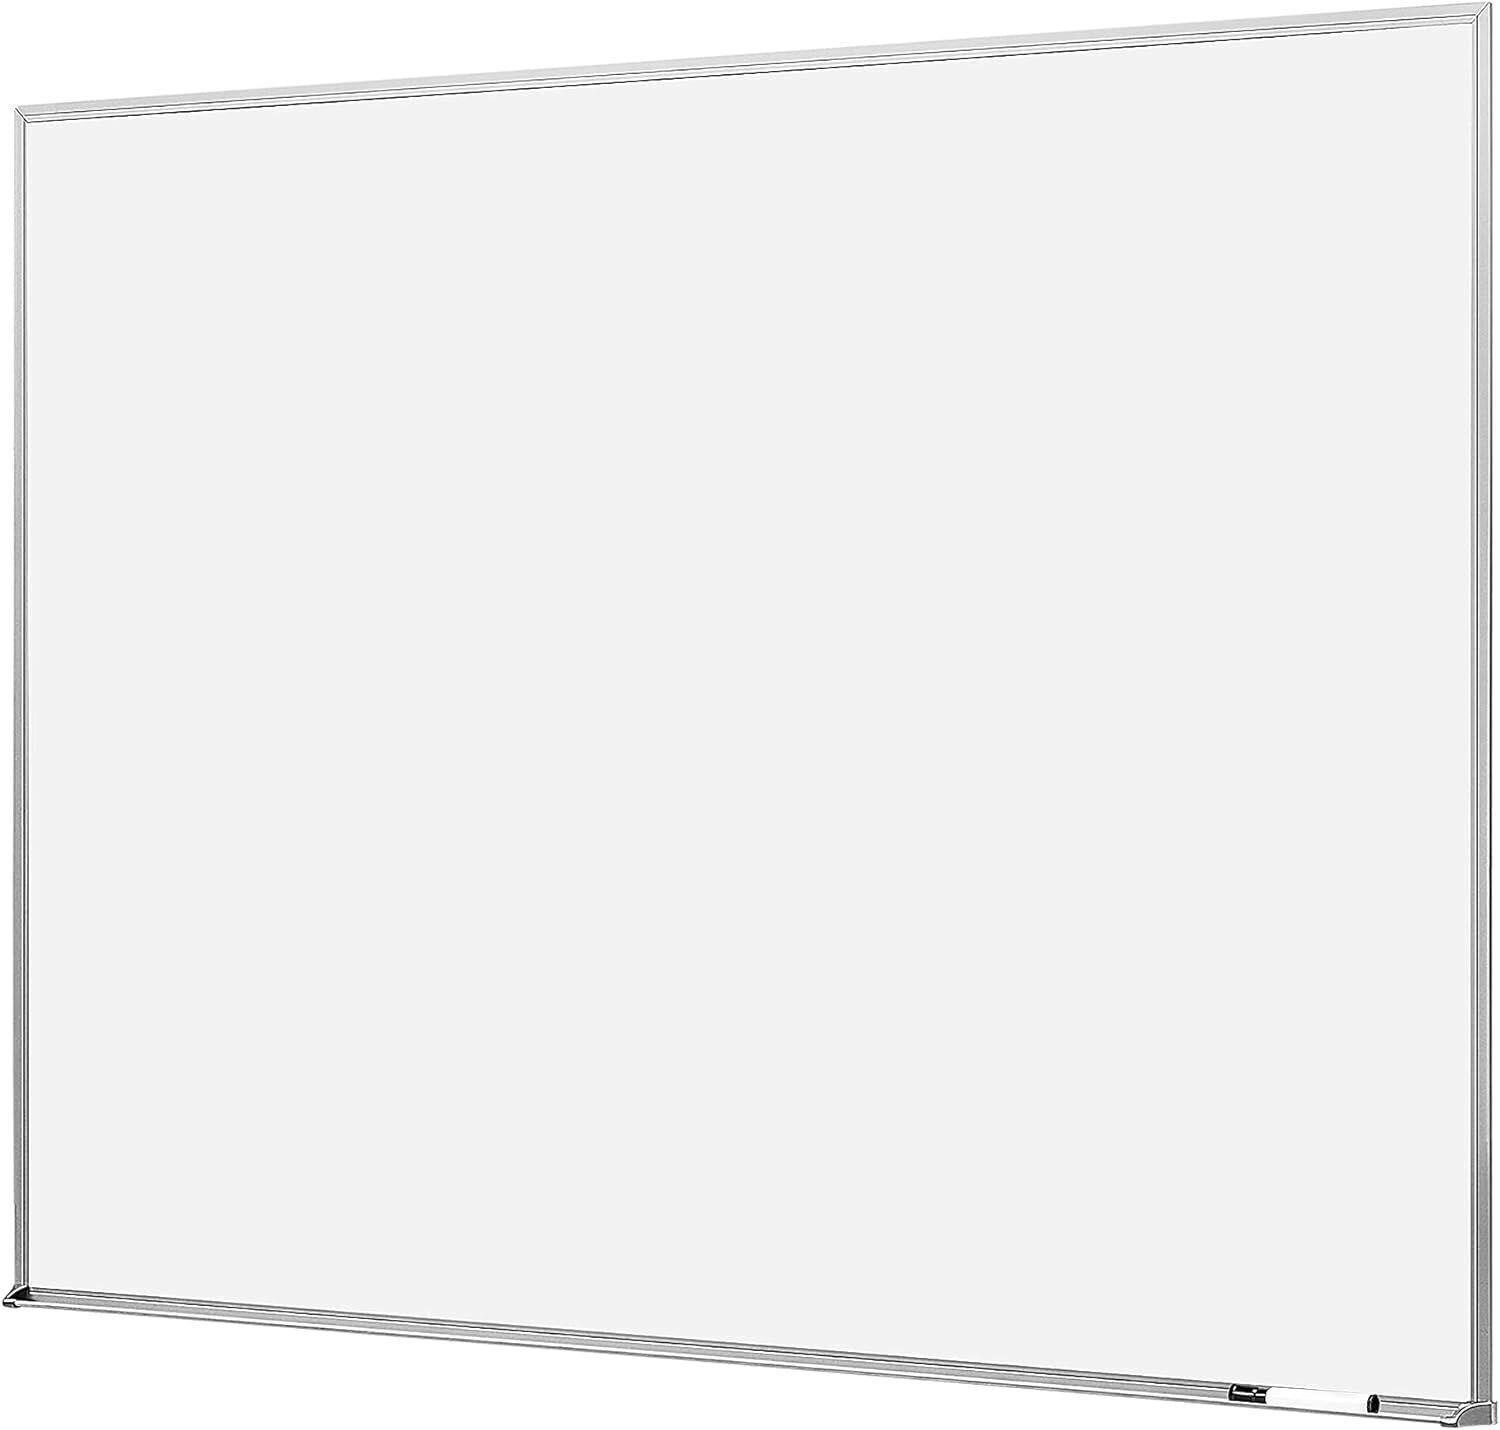 Amazon Basics Dry Erase White Board, 36 x 48" $110